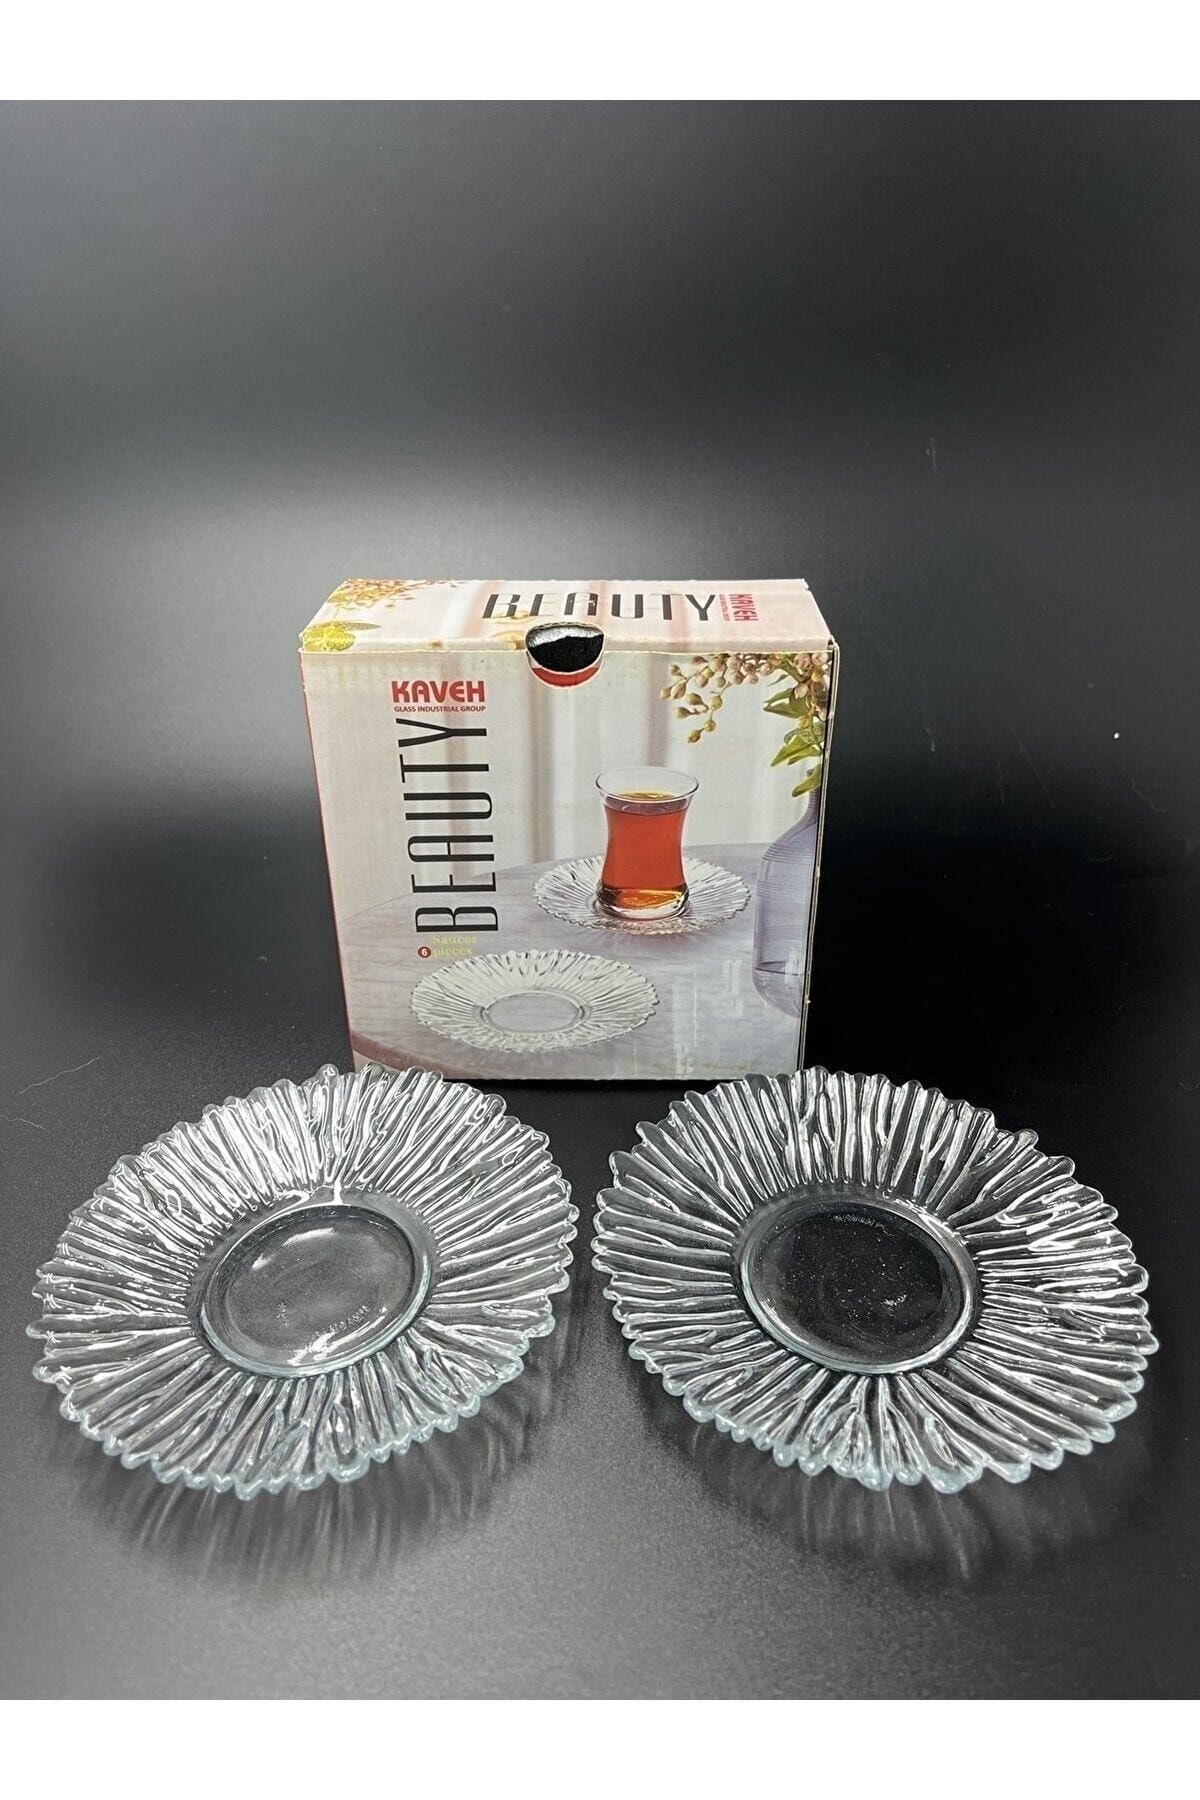 Kaveh glass Ithal Ürün 6 Adet Çay Tabağı Kaveh Marka